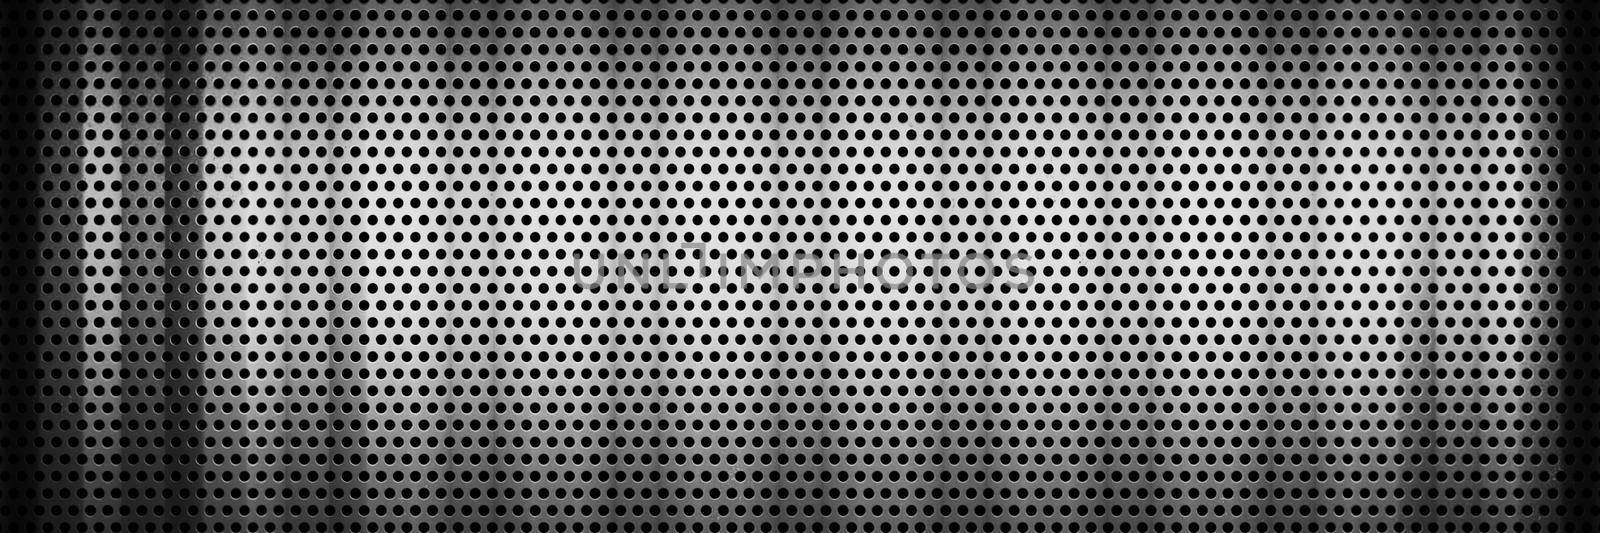 Modern metallic honeycomb and hexagon background pattern. 3d rendering